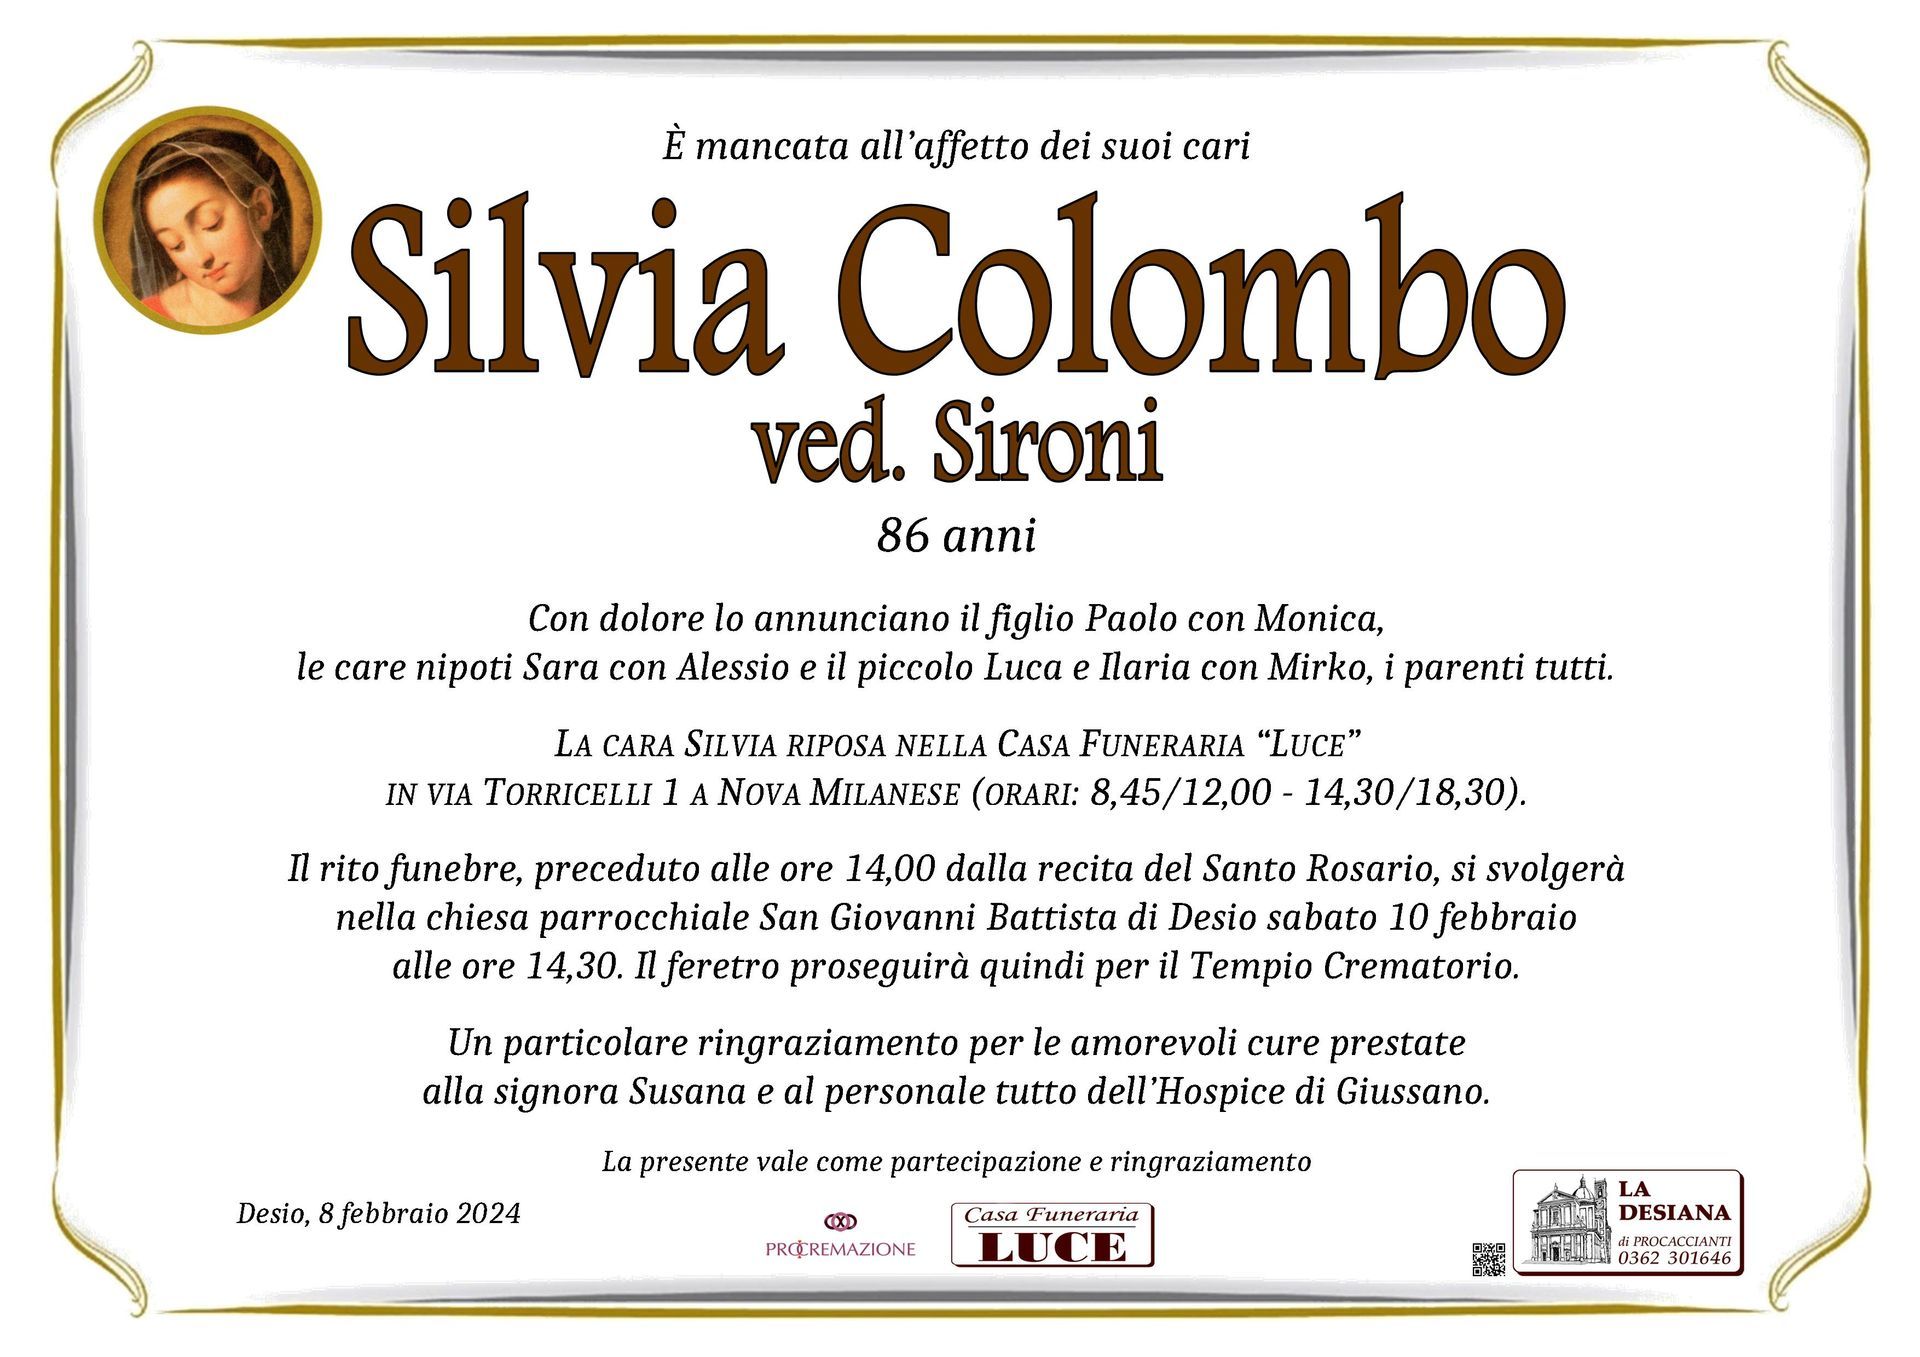 Silvia Colombo ved. Sironi